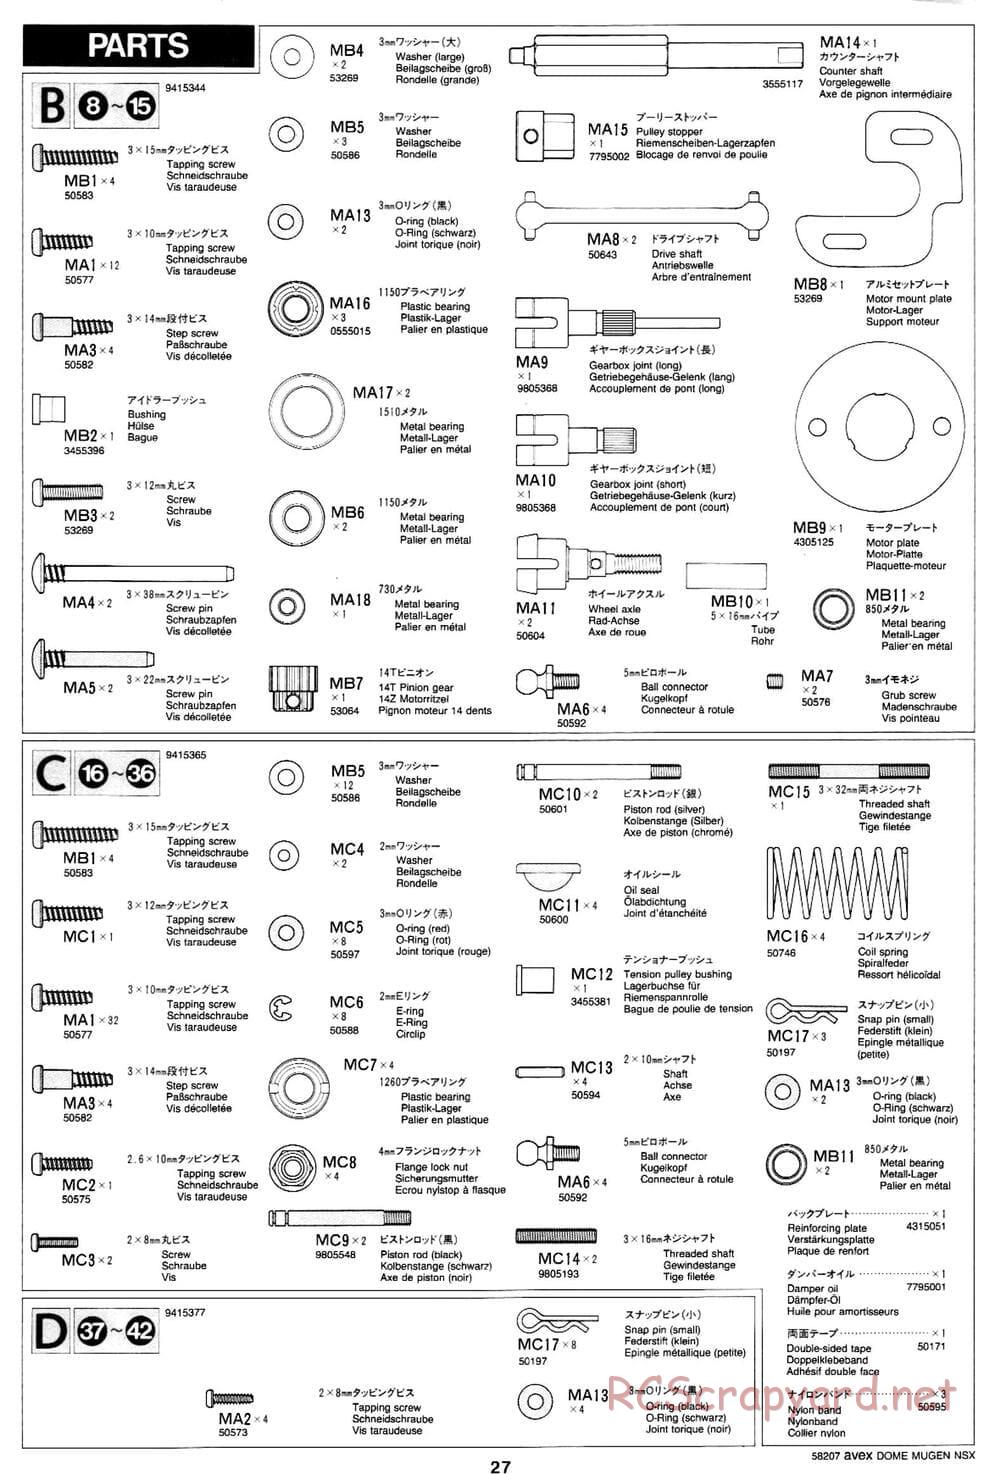 Tamiya - Avex Dome Mugen NSX - TA-03R Chassis - Manual - Page 27